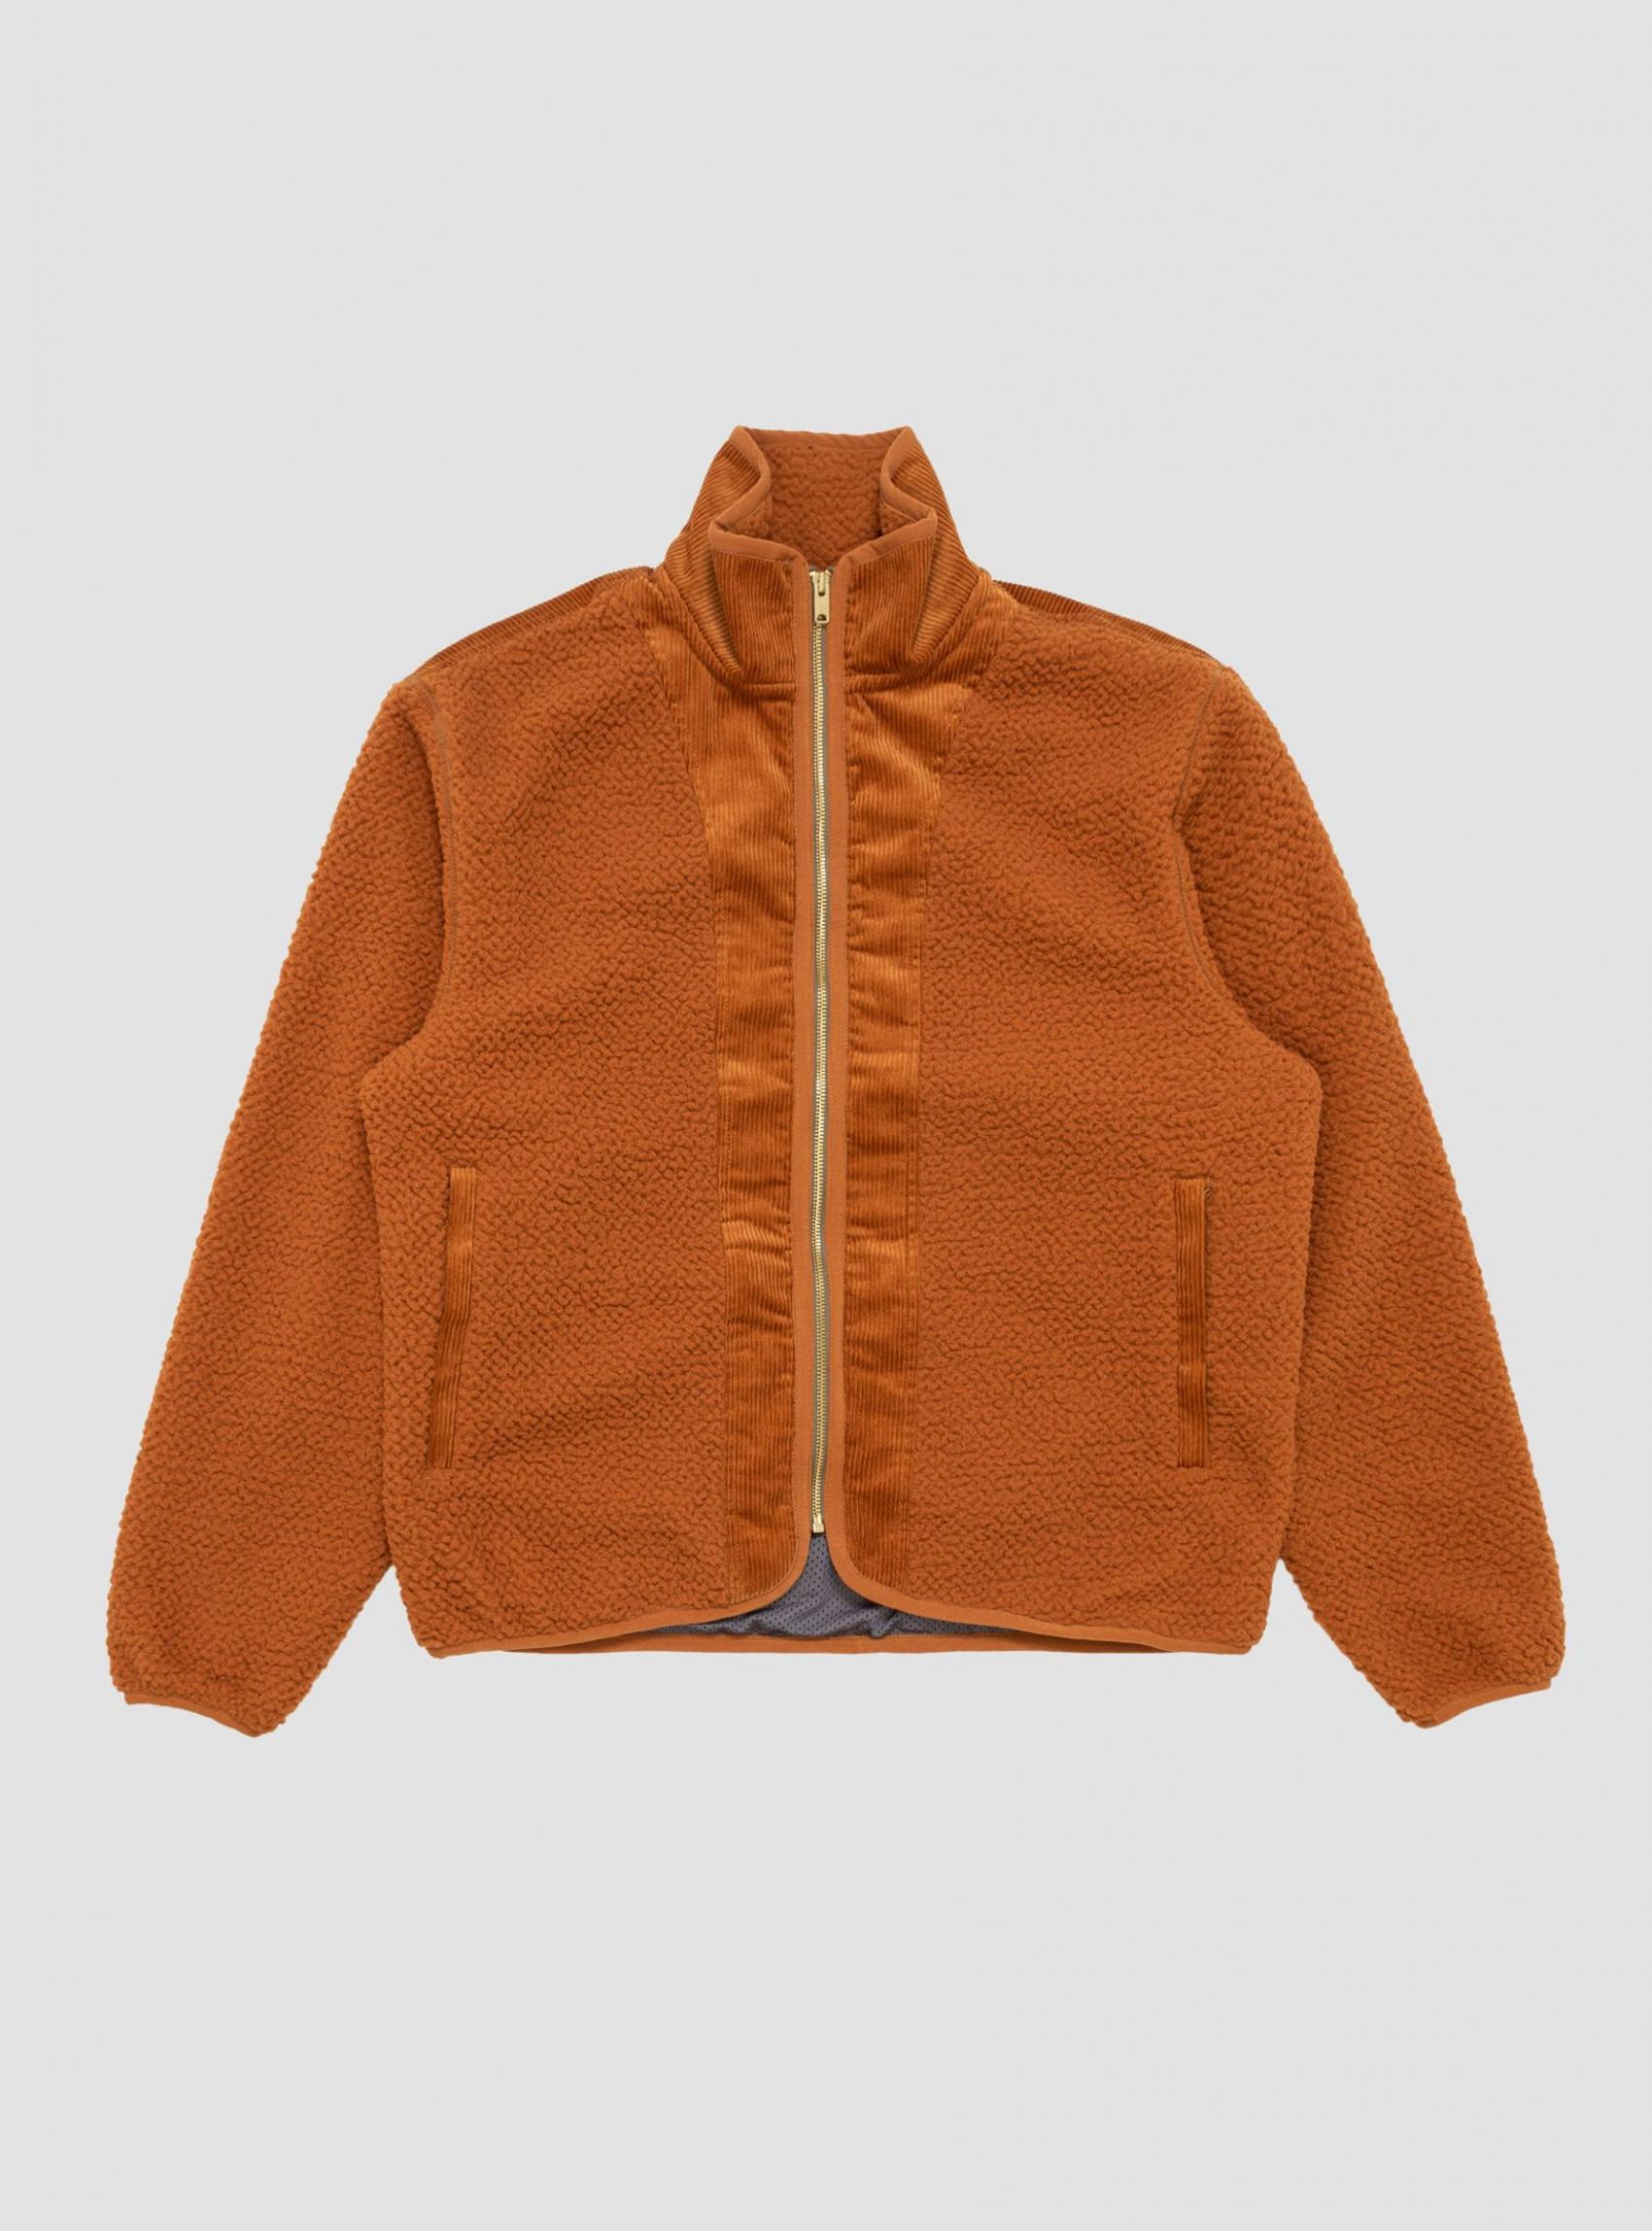 Jackets & Outerwear | Garbstore Mens Canadienne Fleece Jacket Rust Orange Orange